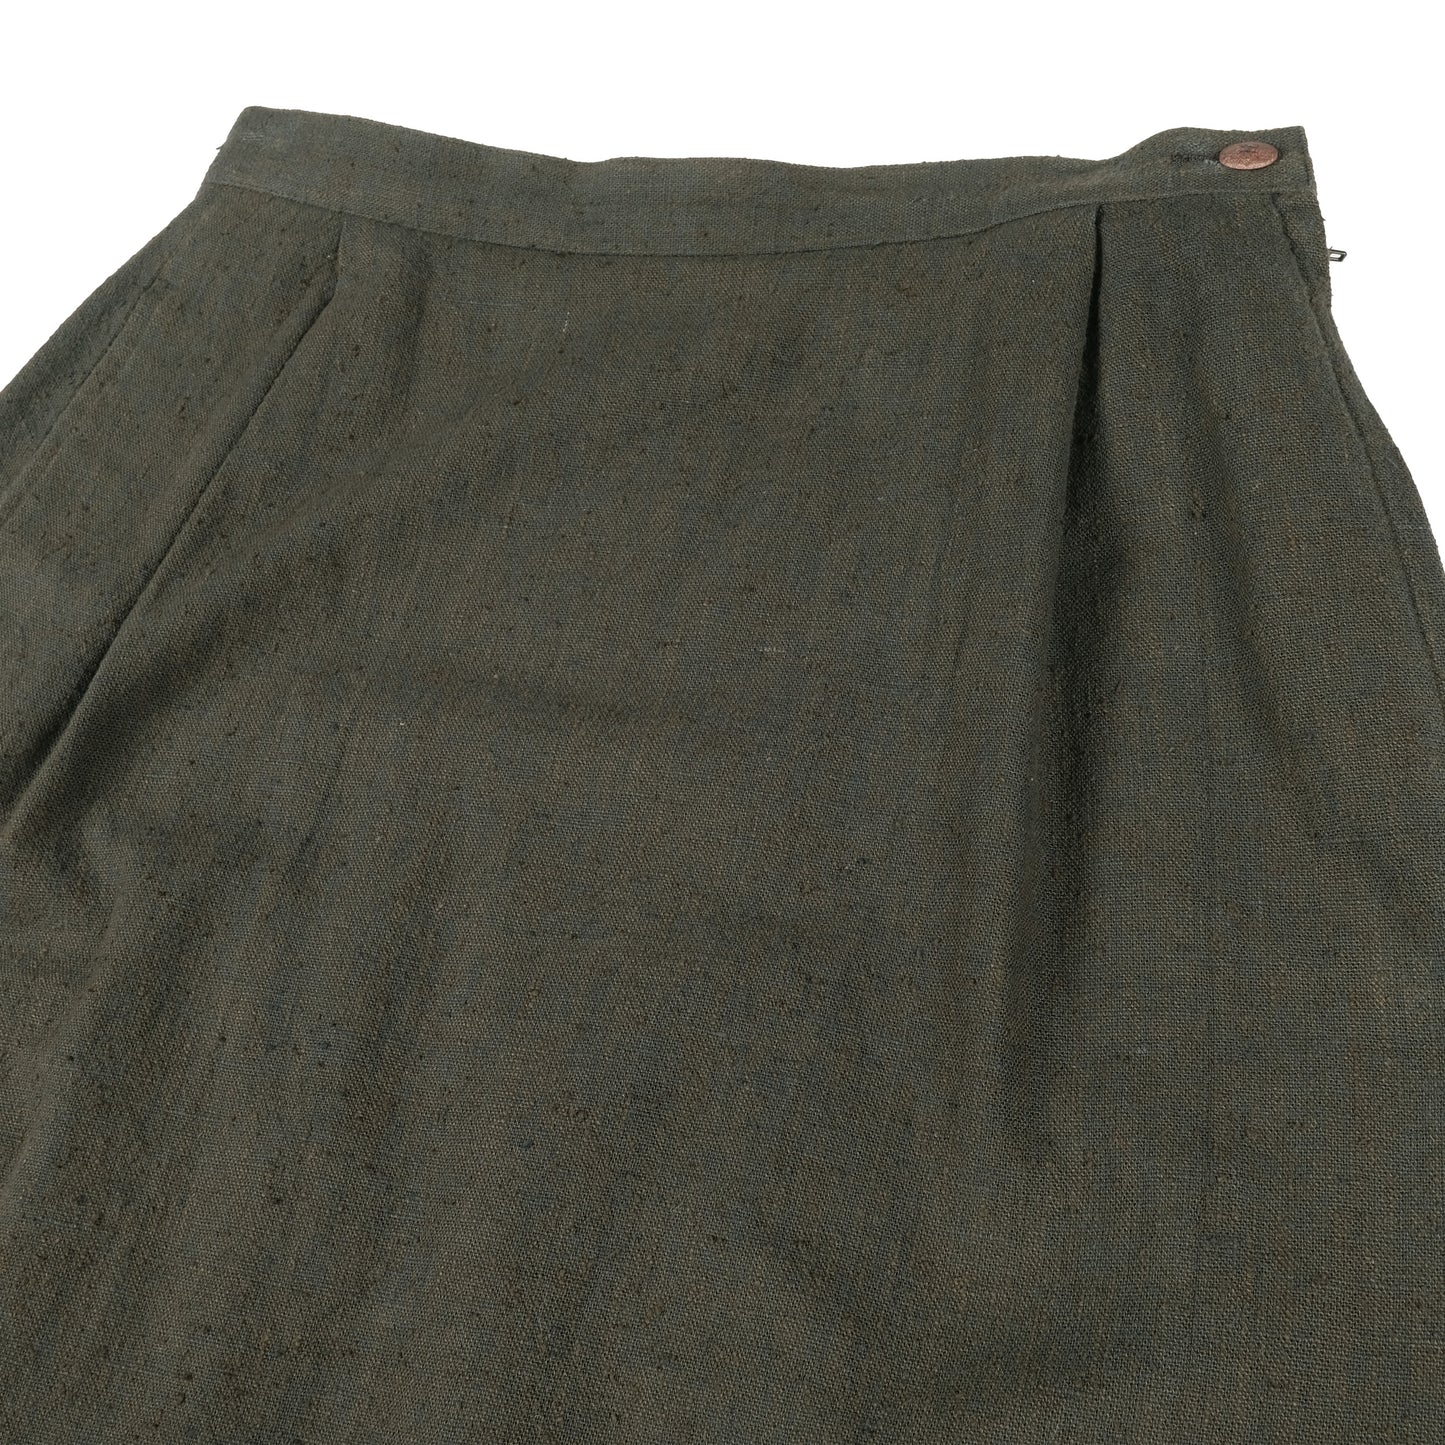 Issey Miyake Long Forest Green Skirt